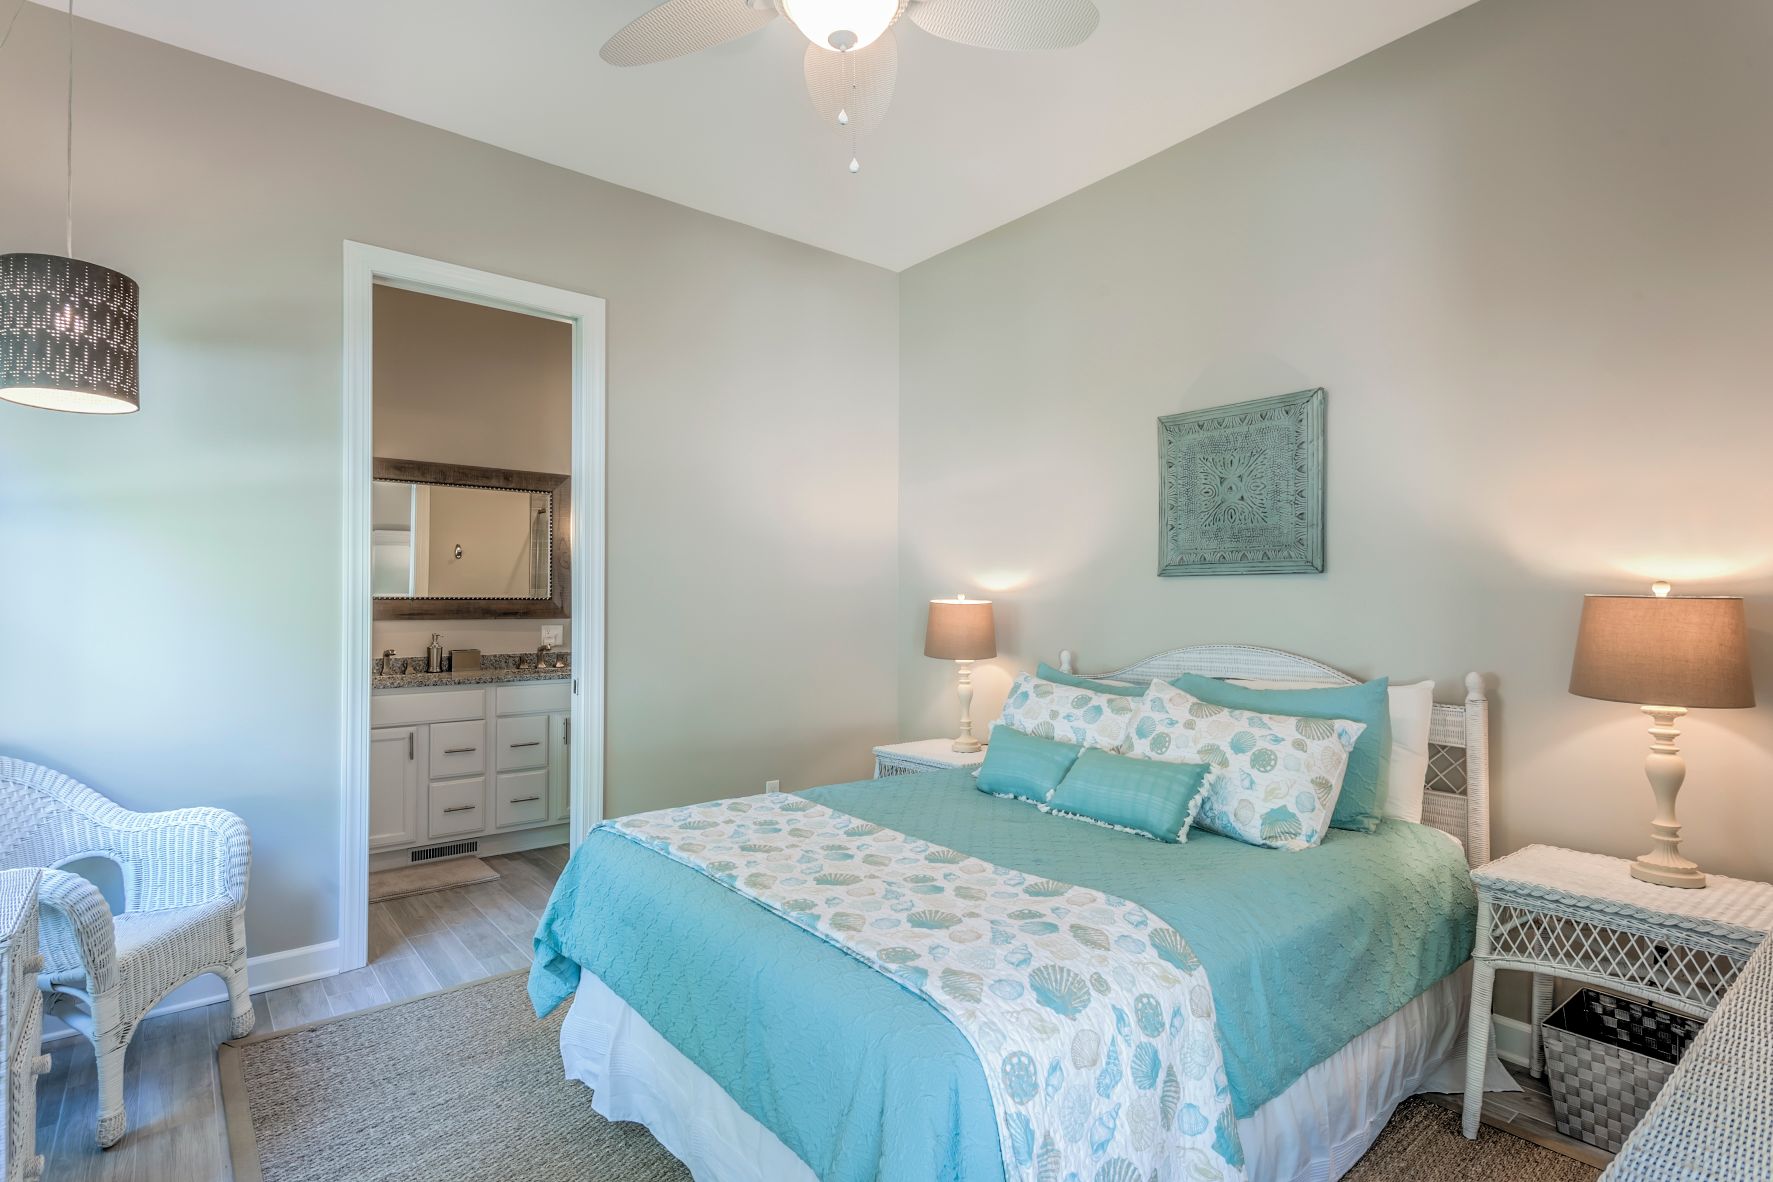 Addition in Juniper Court, Ocean Pines MD - Bedroom with Vintage Bedside Lamps